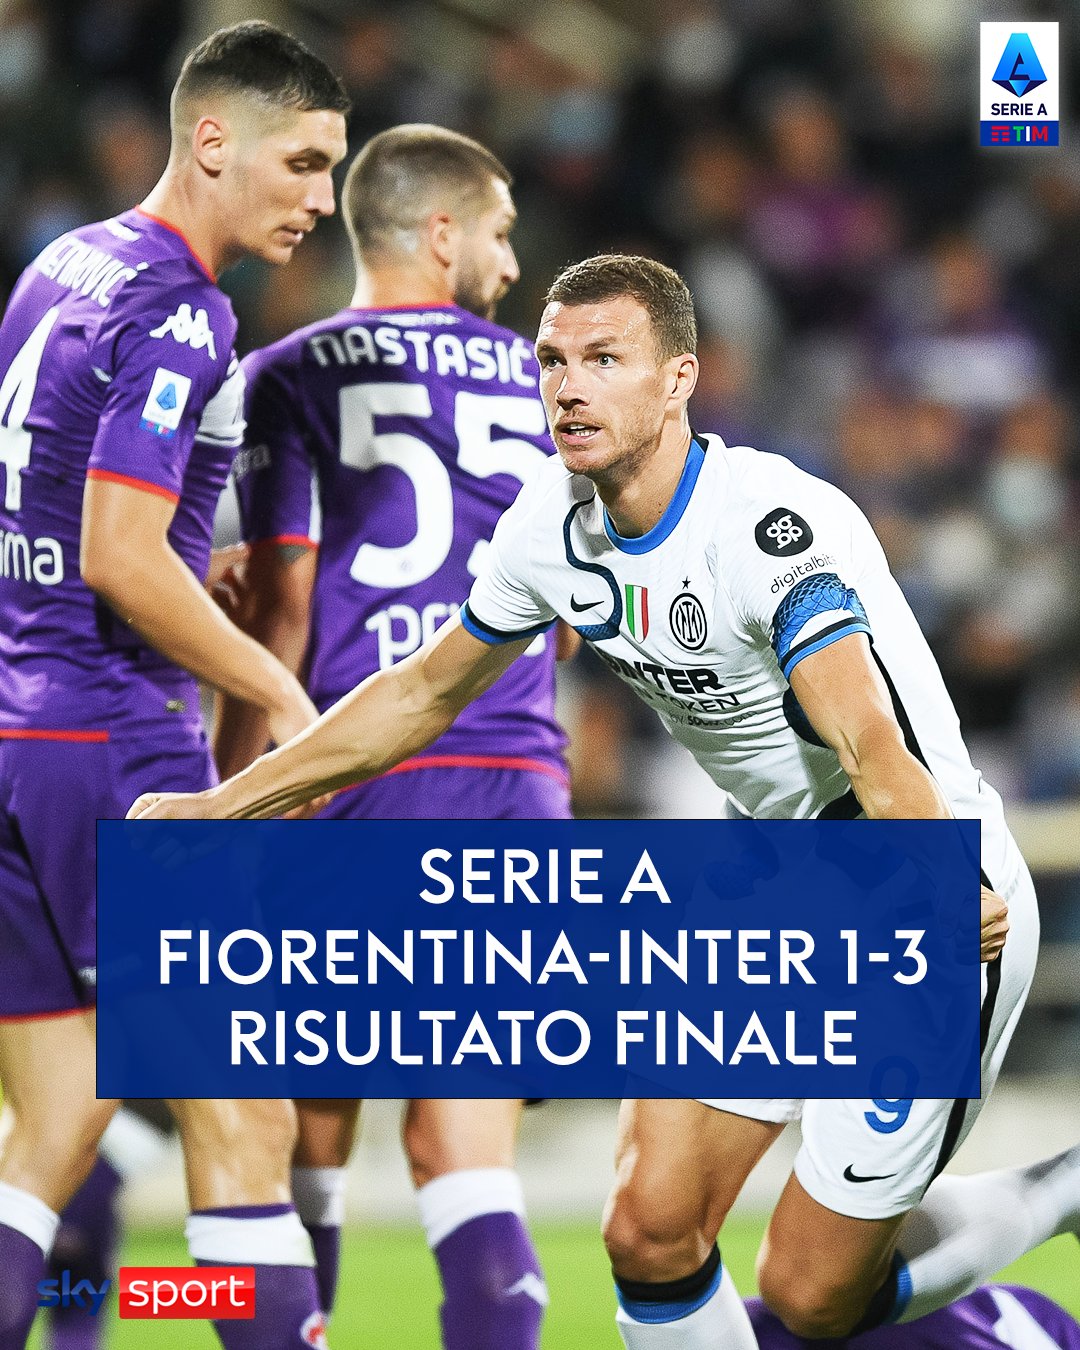 skysport on X: "🏟 FIORENTINA-INTER 1-3 Risultato finale ➖ ⚽ #Sottil (23')  ⚽ #Darmian (52') ⚽ #Dzeko (55') ⚽ #Perisic (87') ➡️ https://t.co/u5uHSXgbLZ  ➖ #SkySport #SerieA #FiorentinaInter https://t.co/4vUJn3ZB0P" / X